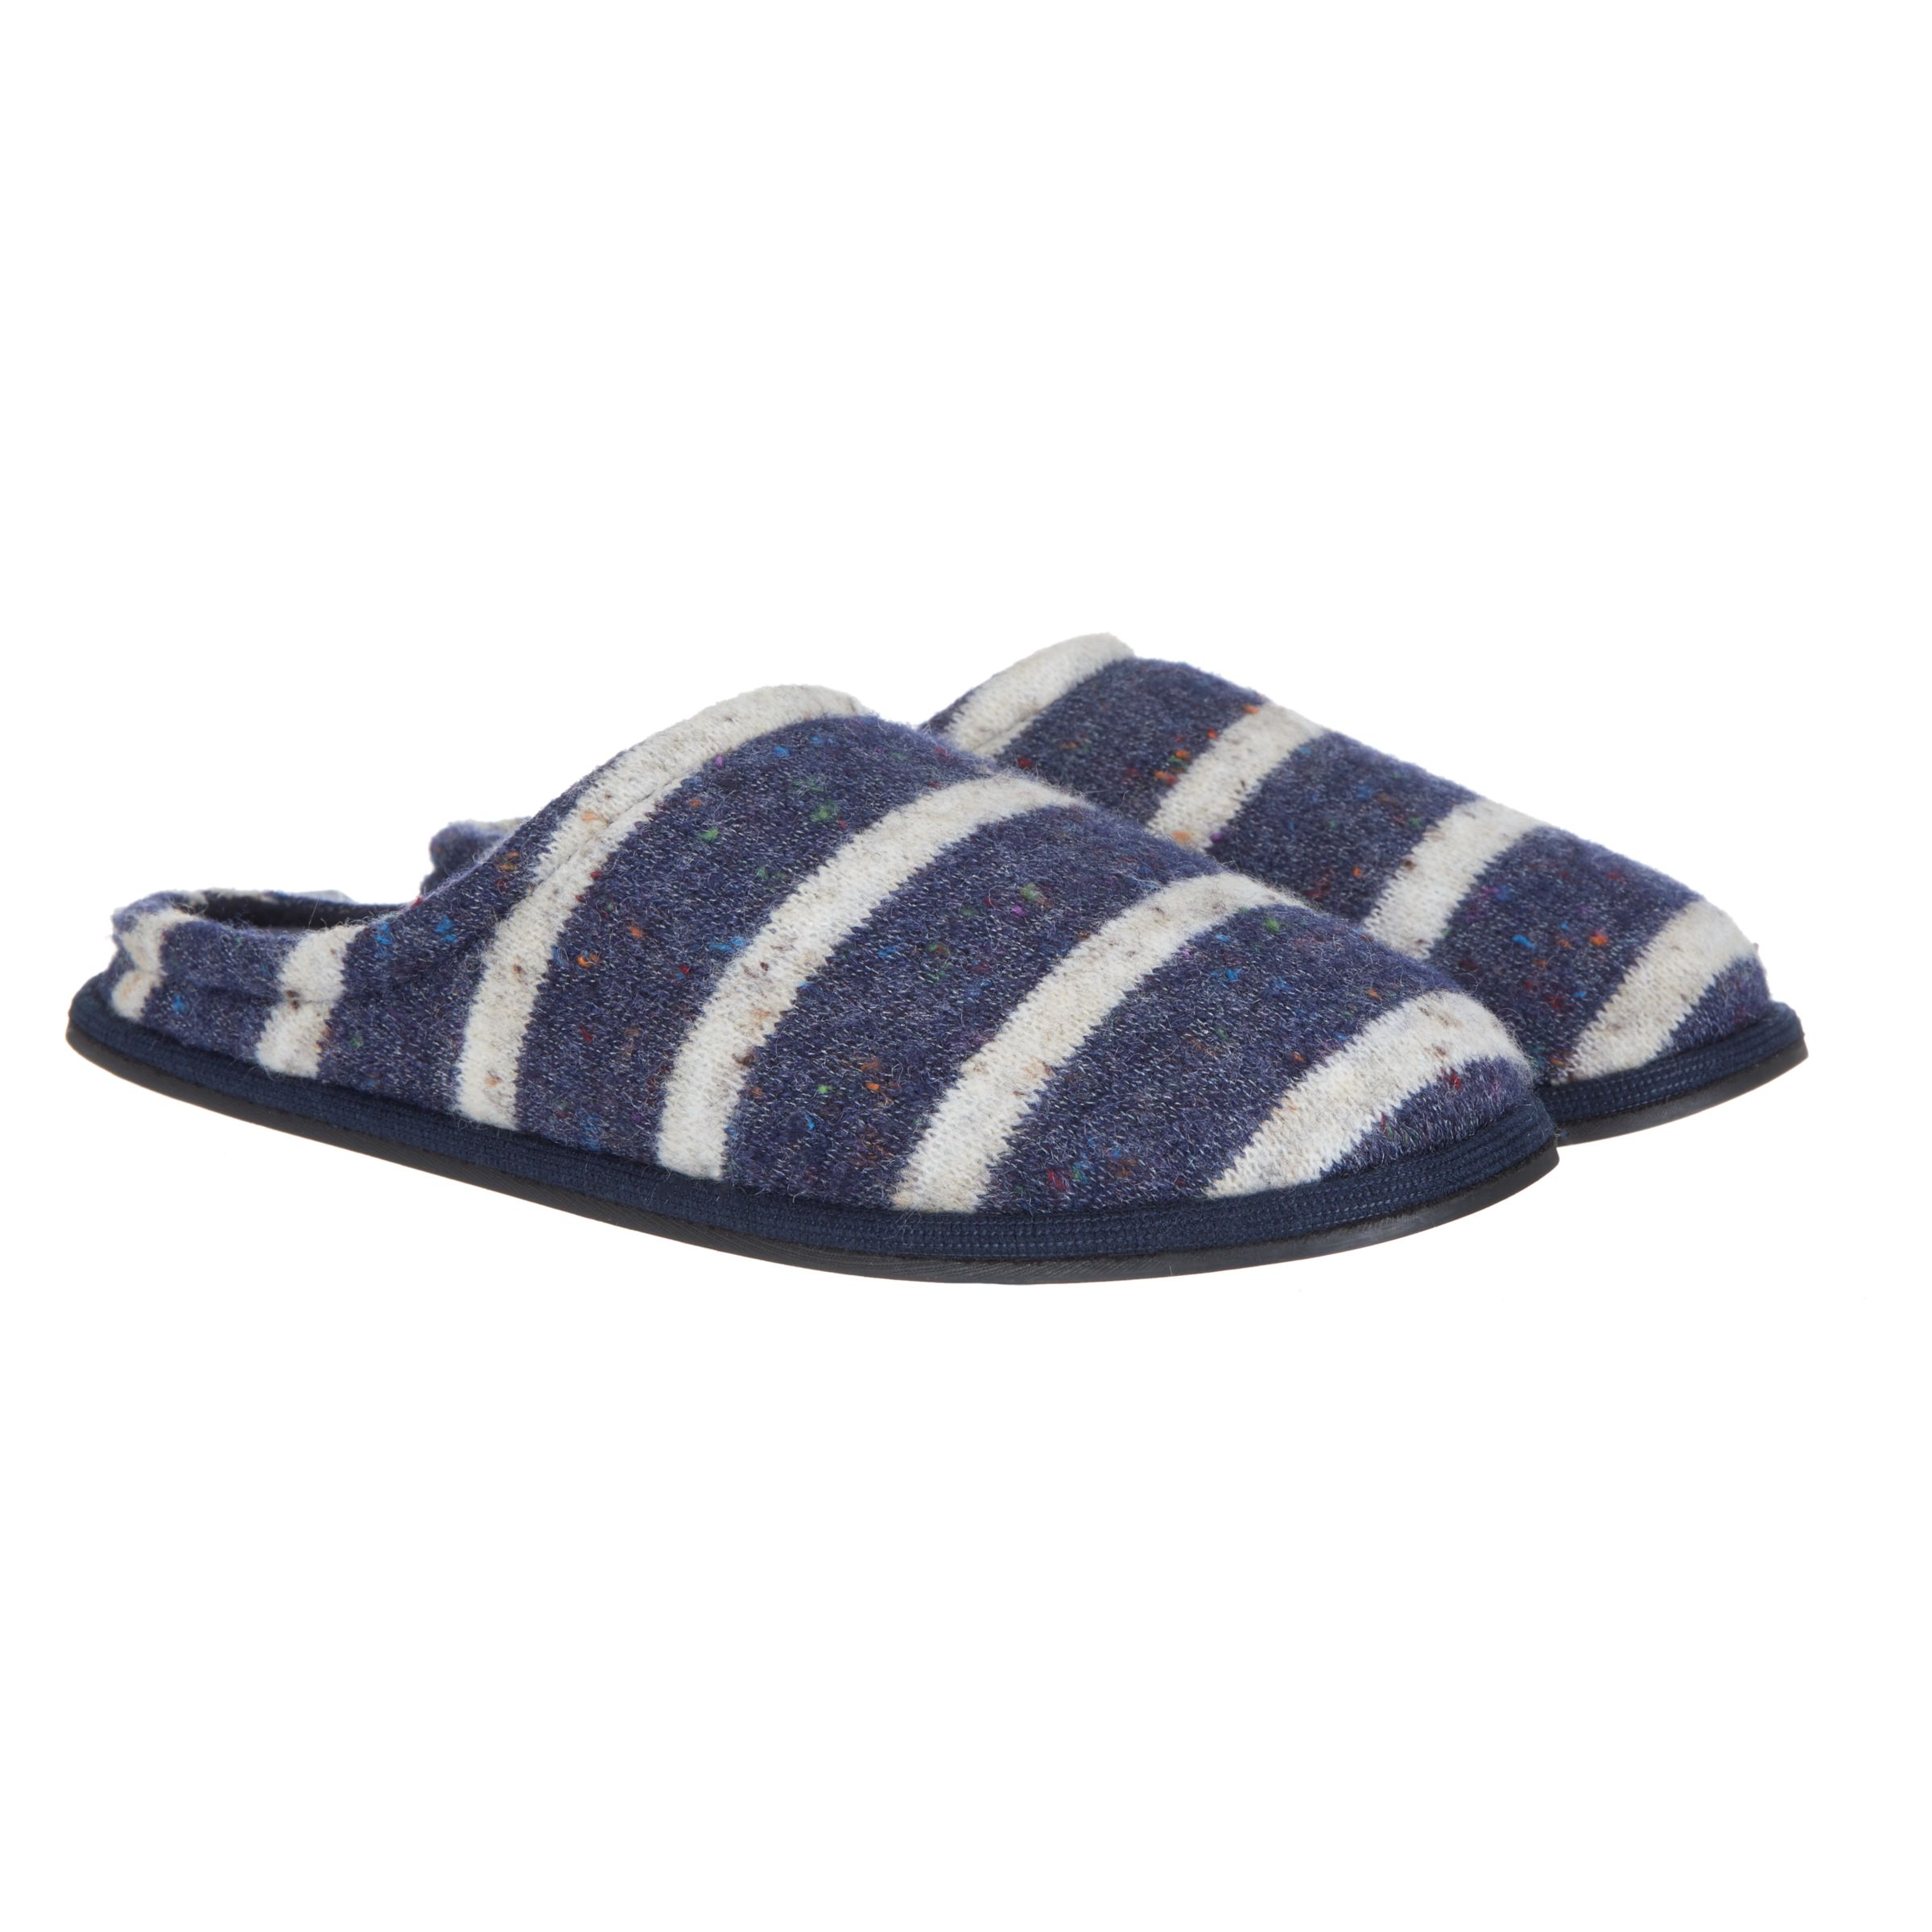 John Lewis & Partners Fleck Stripe Mule Slippers, Blue/White, L